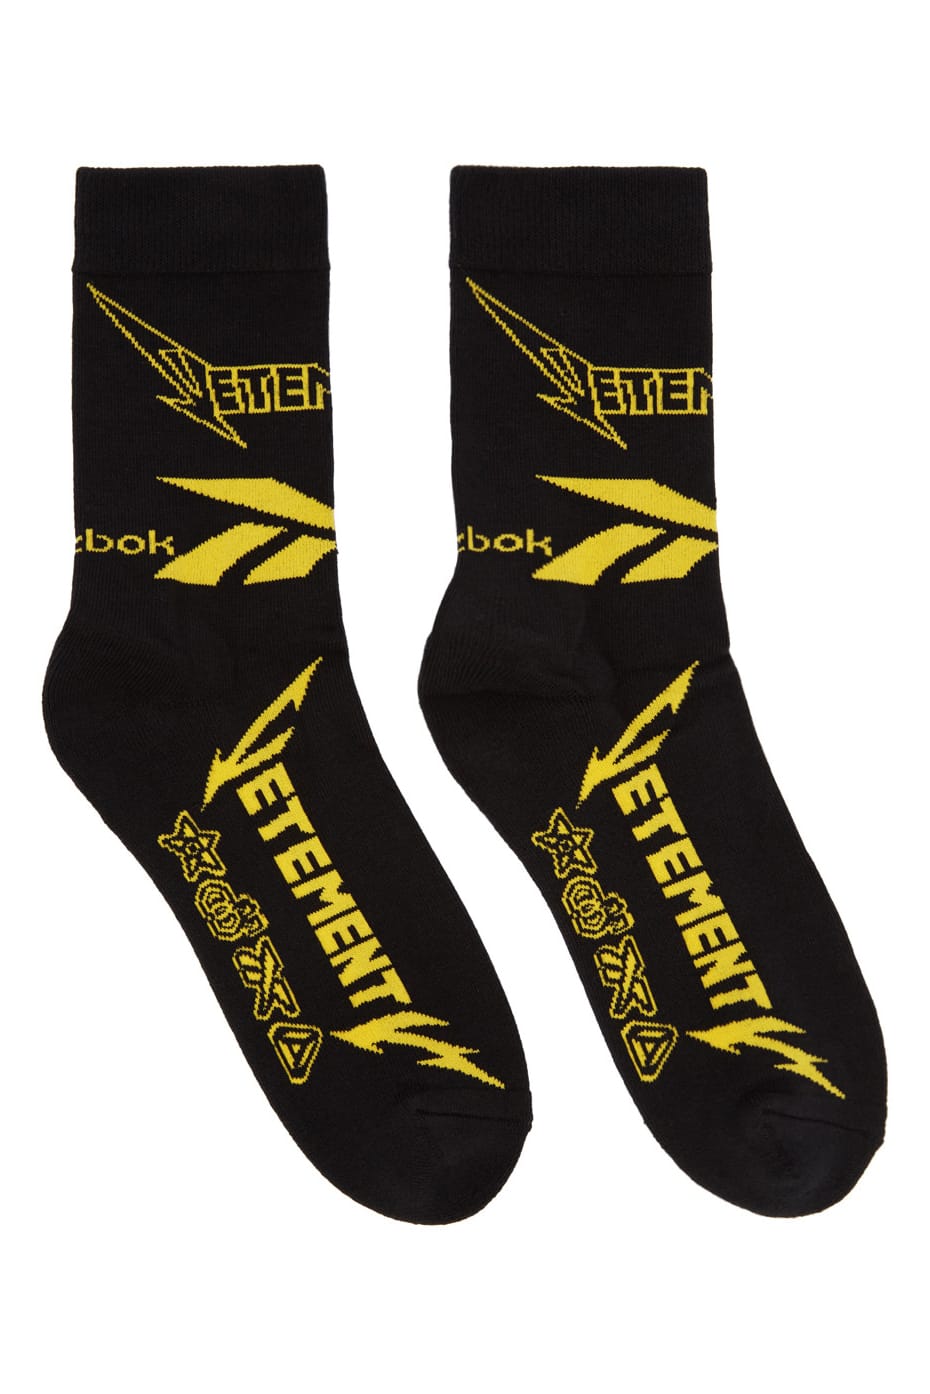 Vetements x Reebok Release Sock Collection | HYPEBEAST